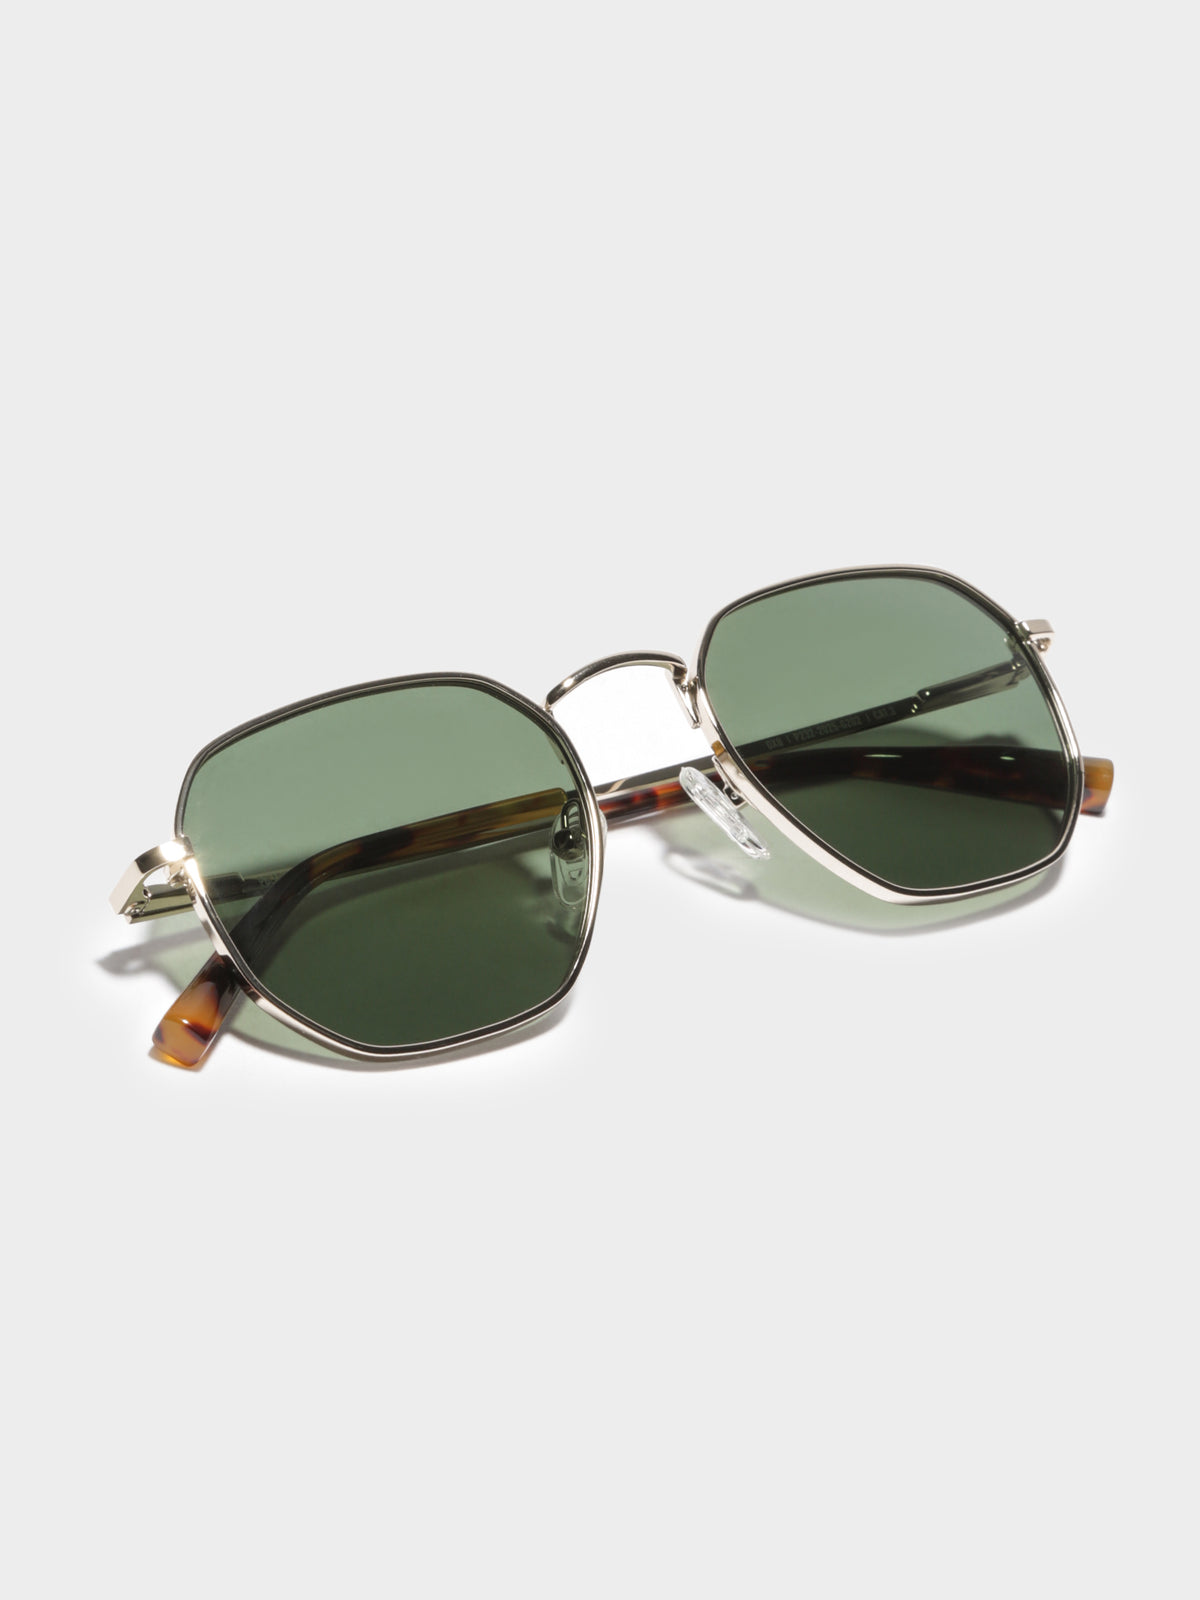 DXB Polarised Sunglasses in Polished Gold &amp; Dark Green